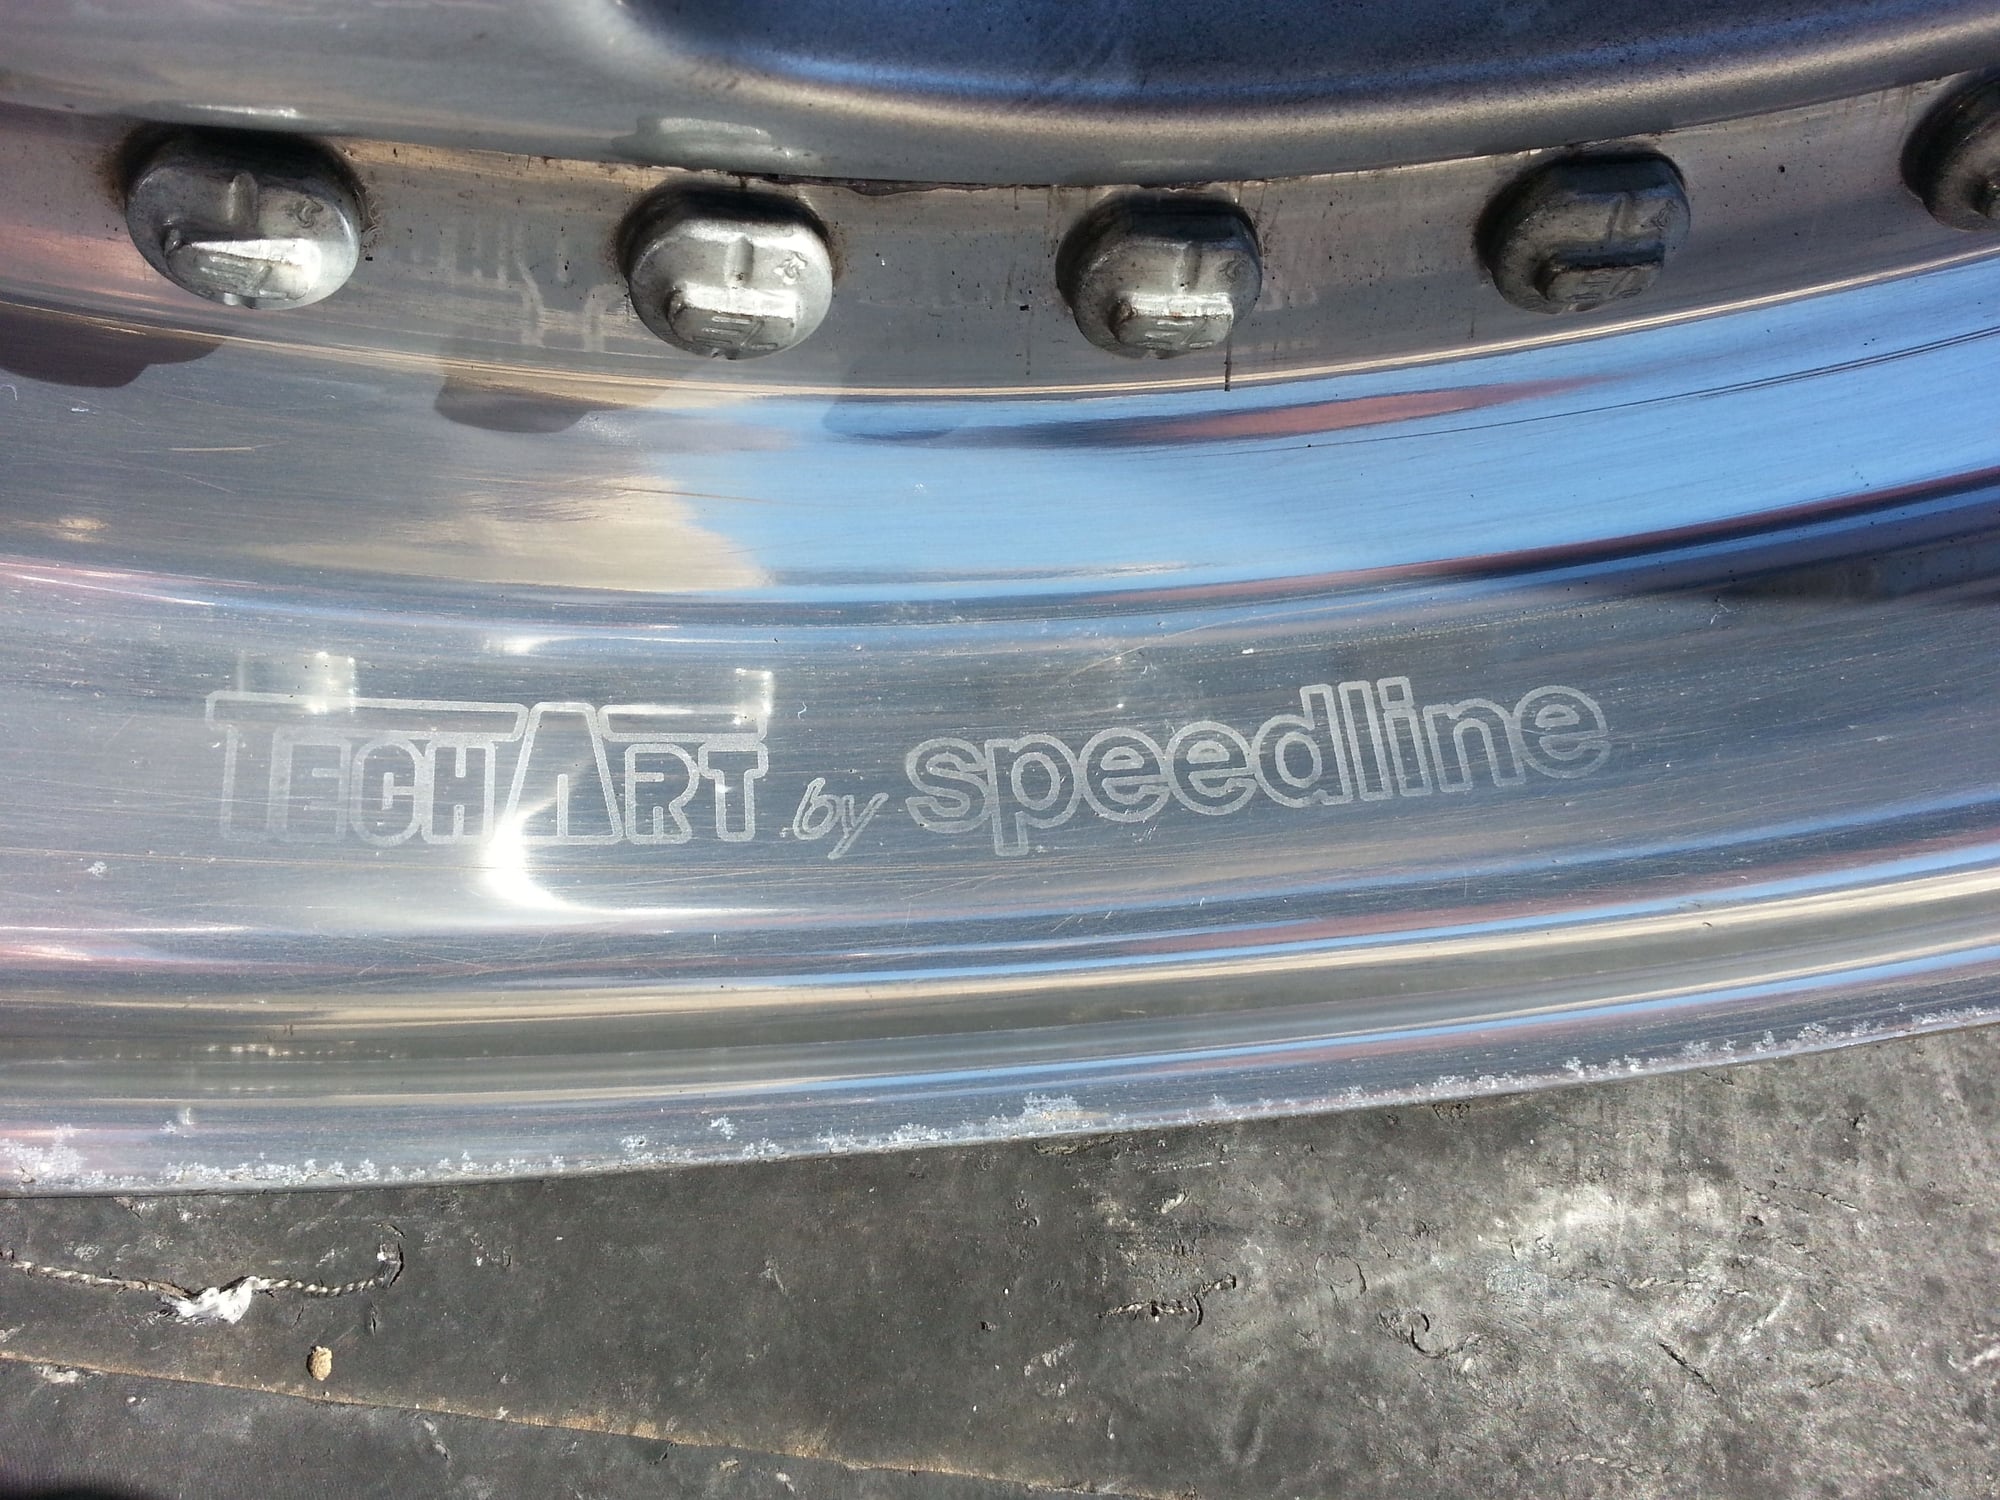 Wheels and Tires/Axles - Speedline Daytona wheels - Used - All Years Porsche 911 - Columbia, SC 29063, United States